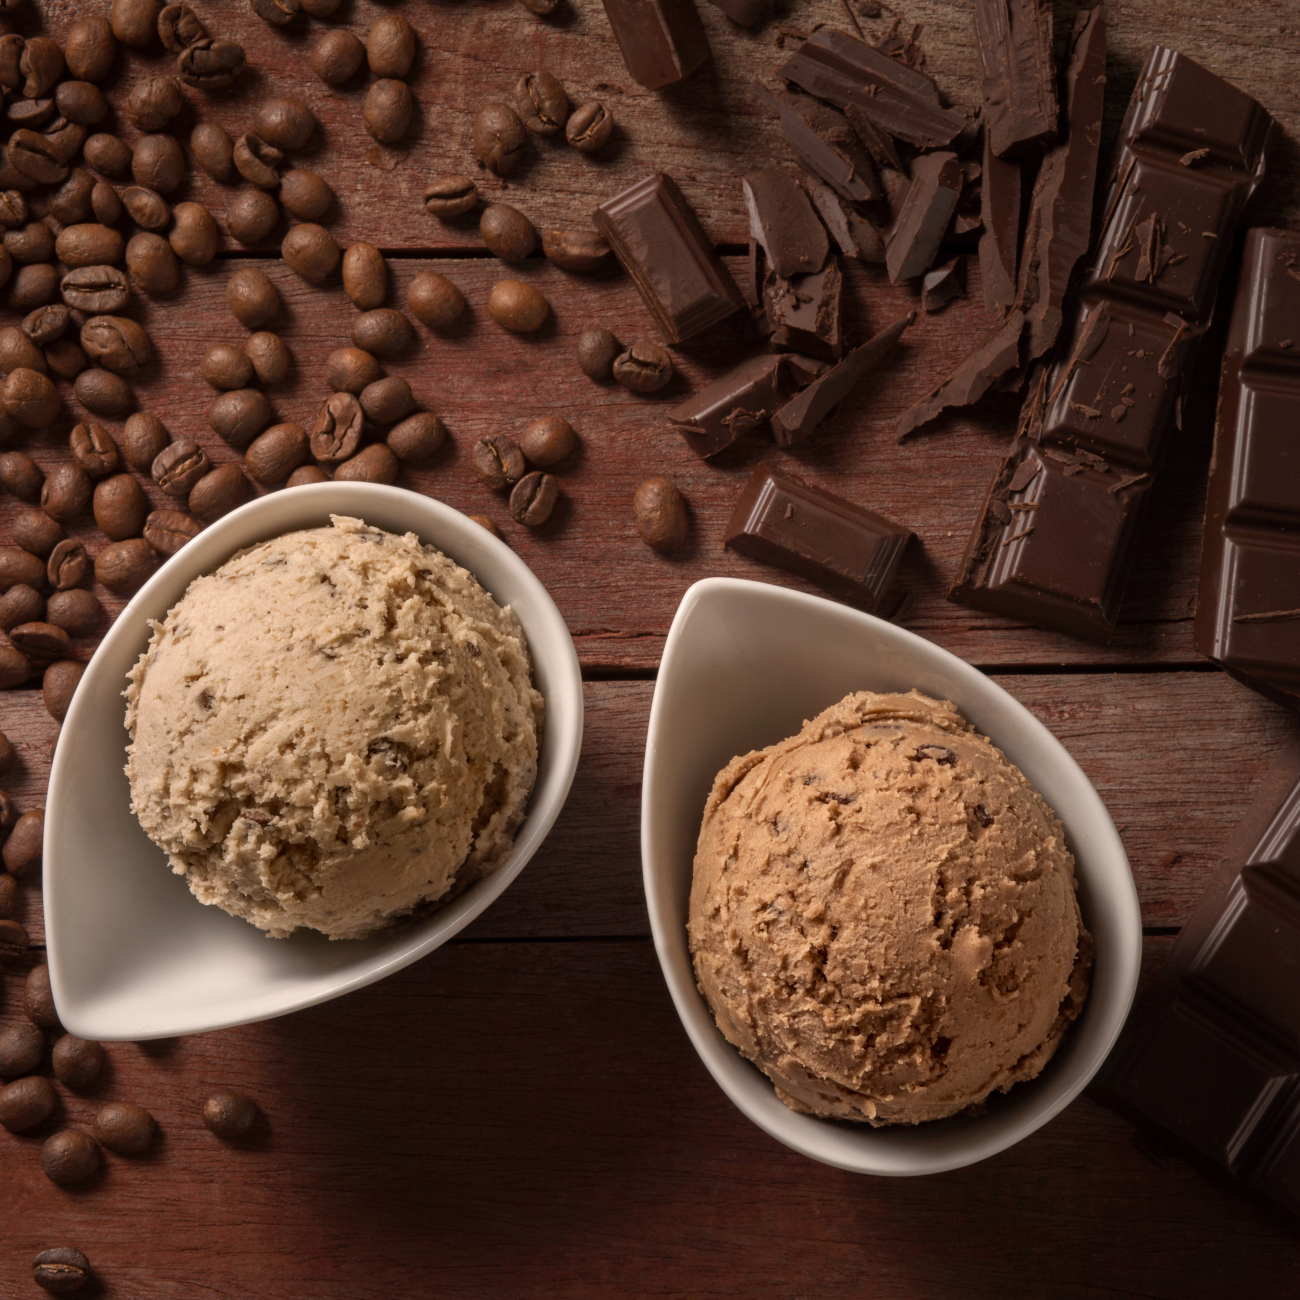 Coffee Bean and Chocolate Ice Cream